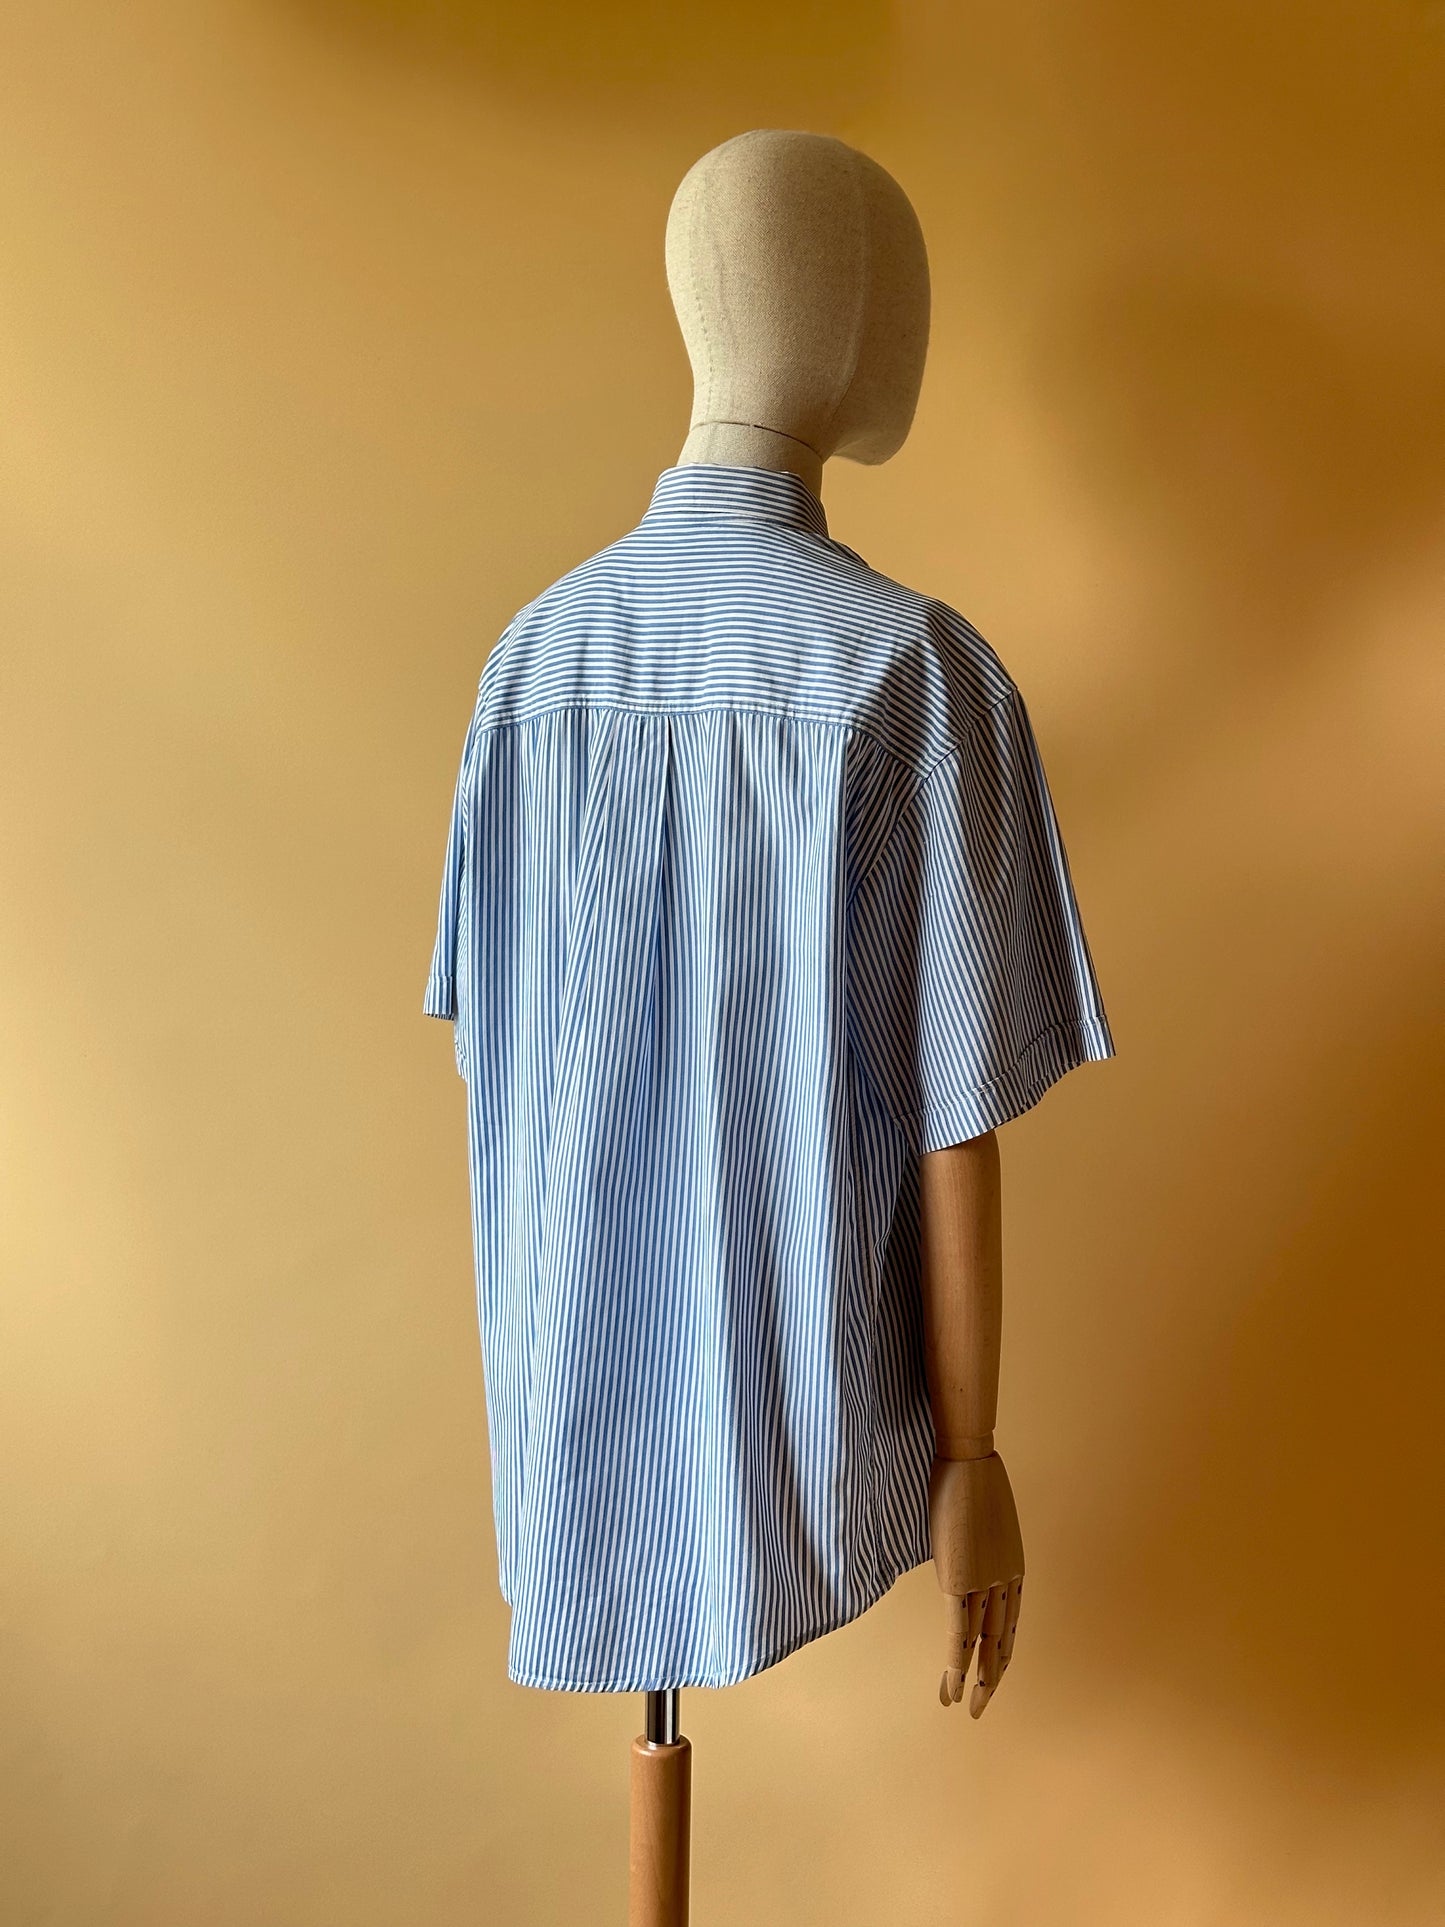 Vintage Short-Sleeved Blue & White Striped Shirt